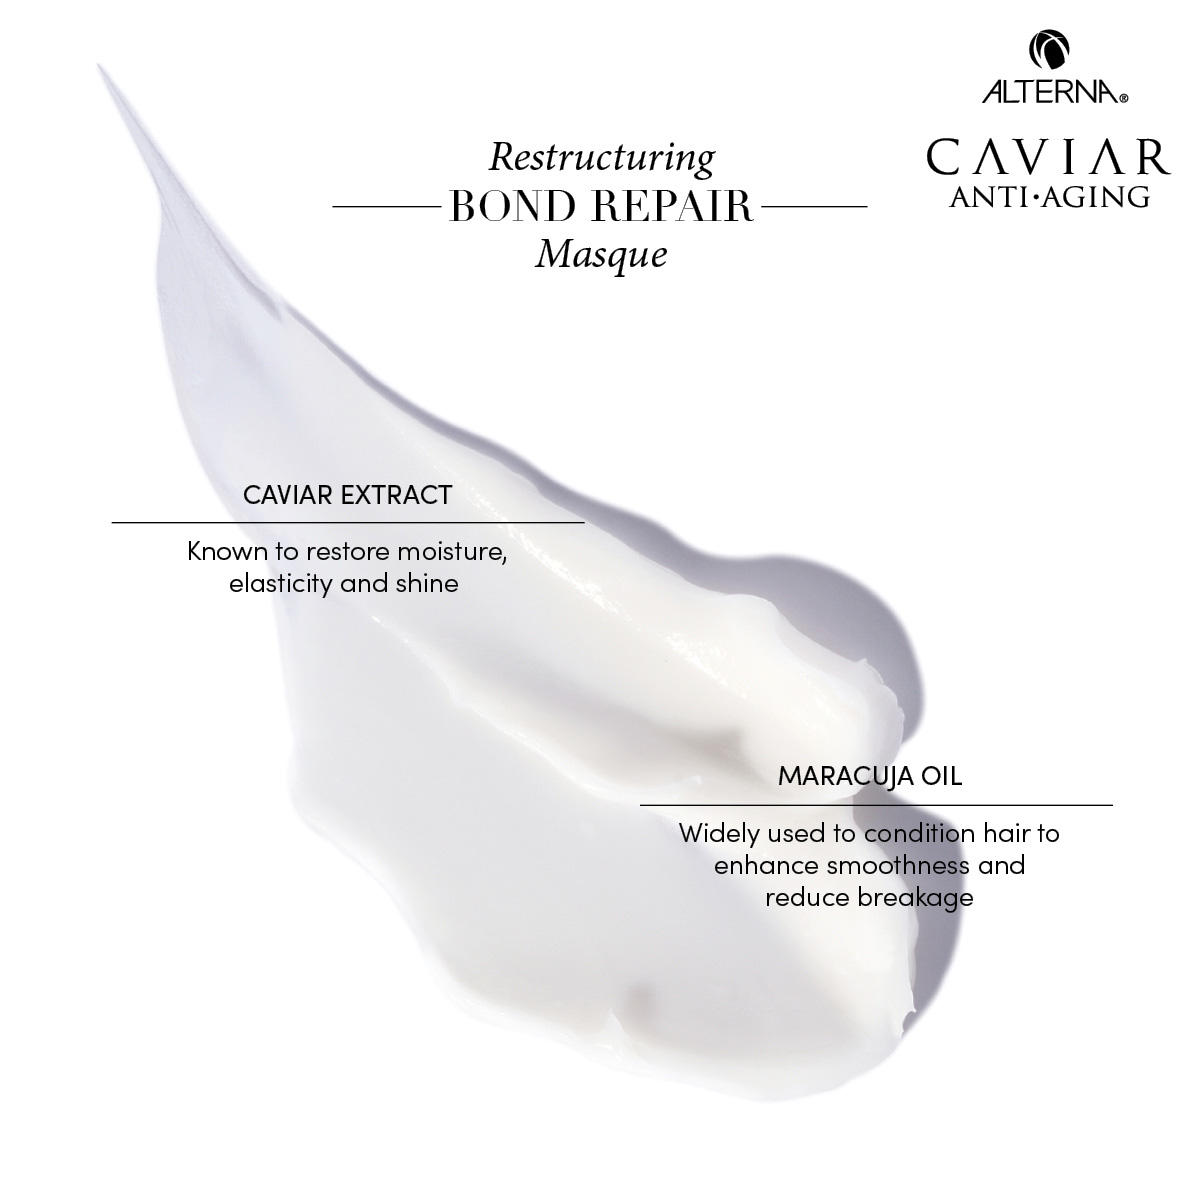 Alterna Caviar Anti-Aging Restructuring Bond Repair Masker 169 g - 4